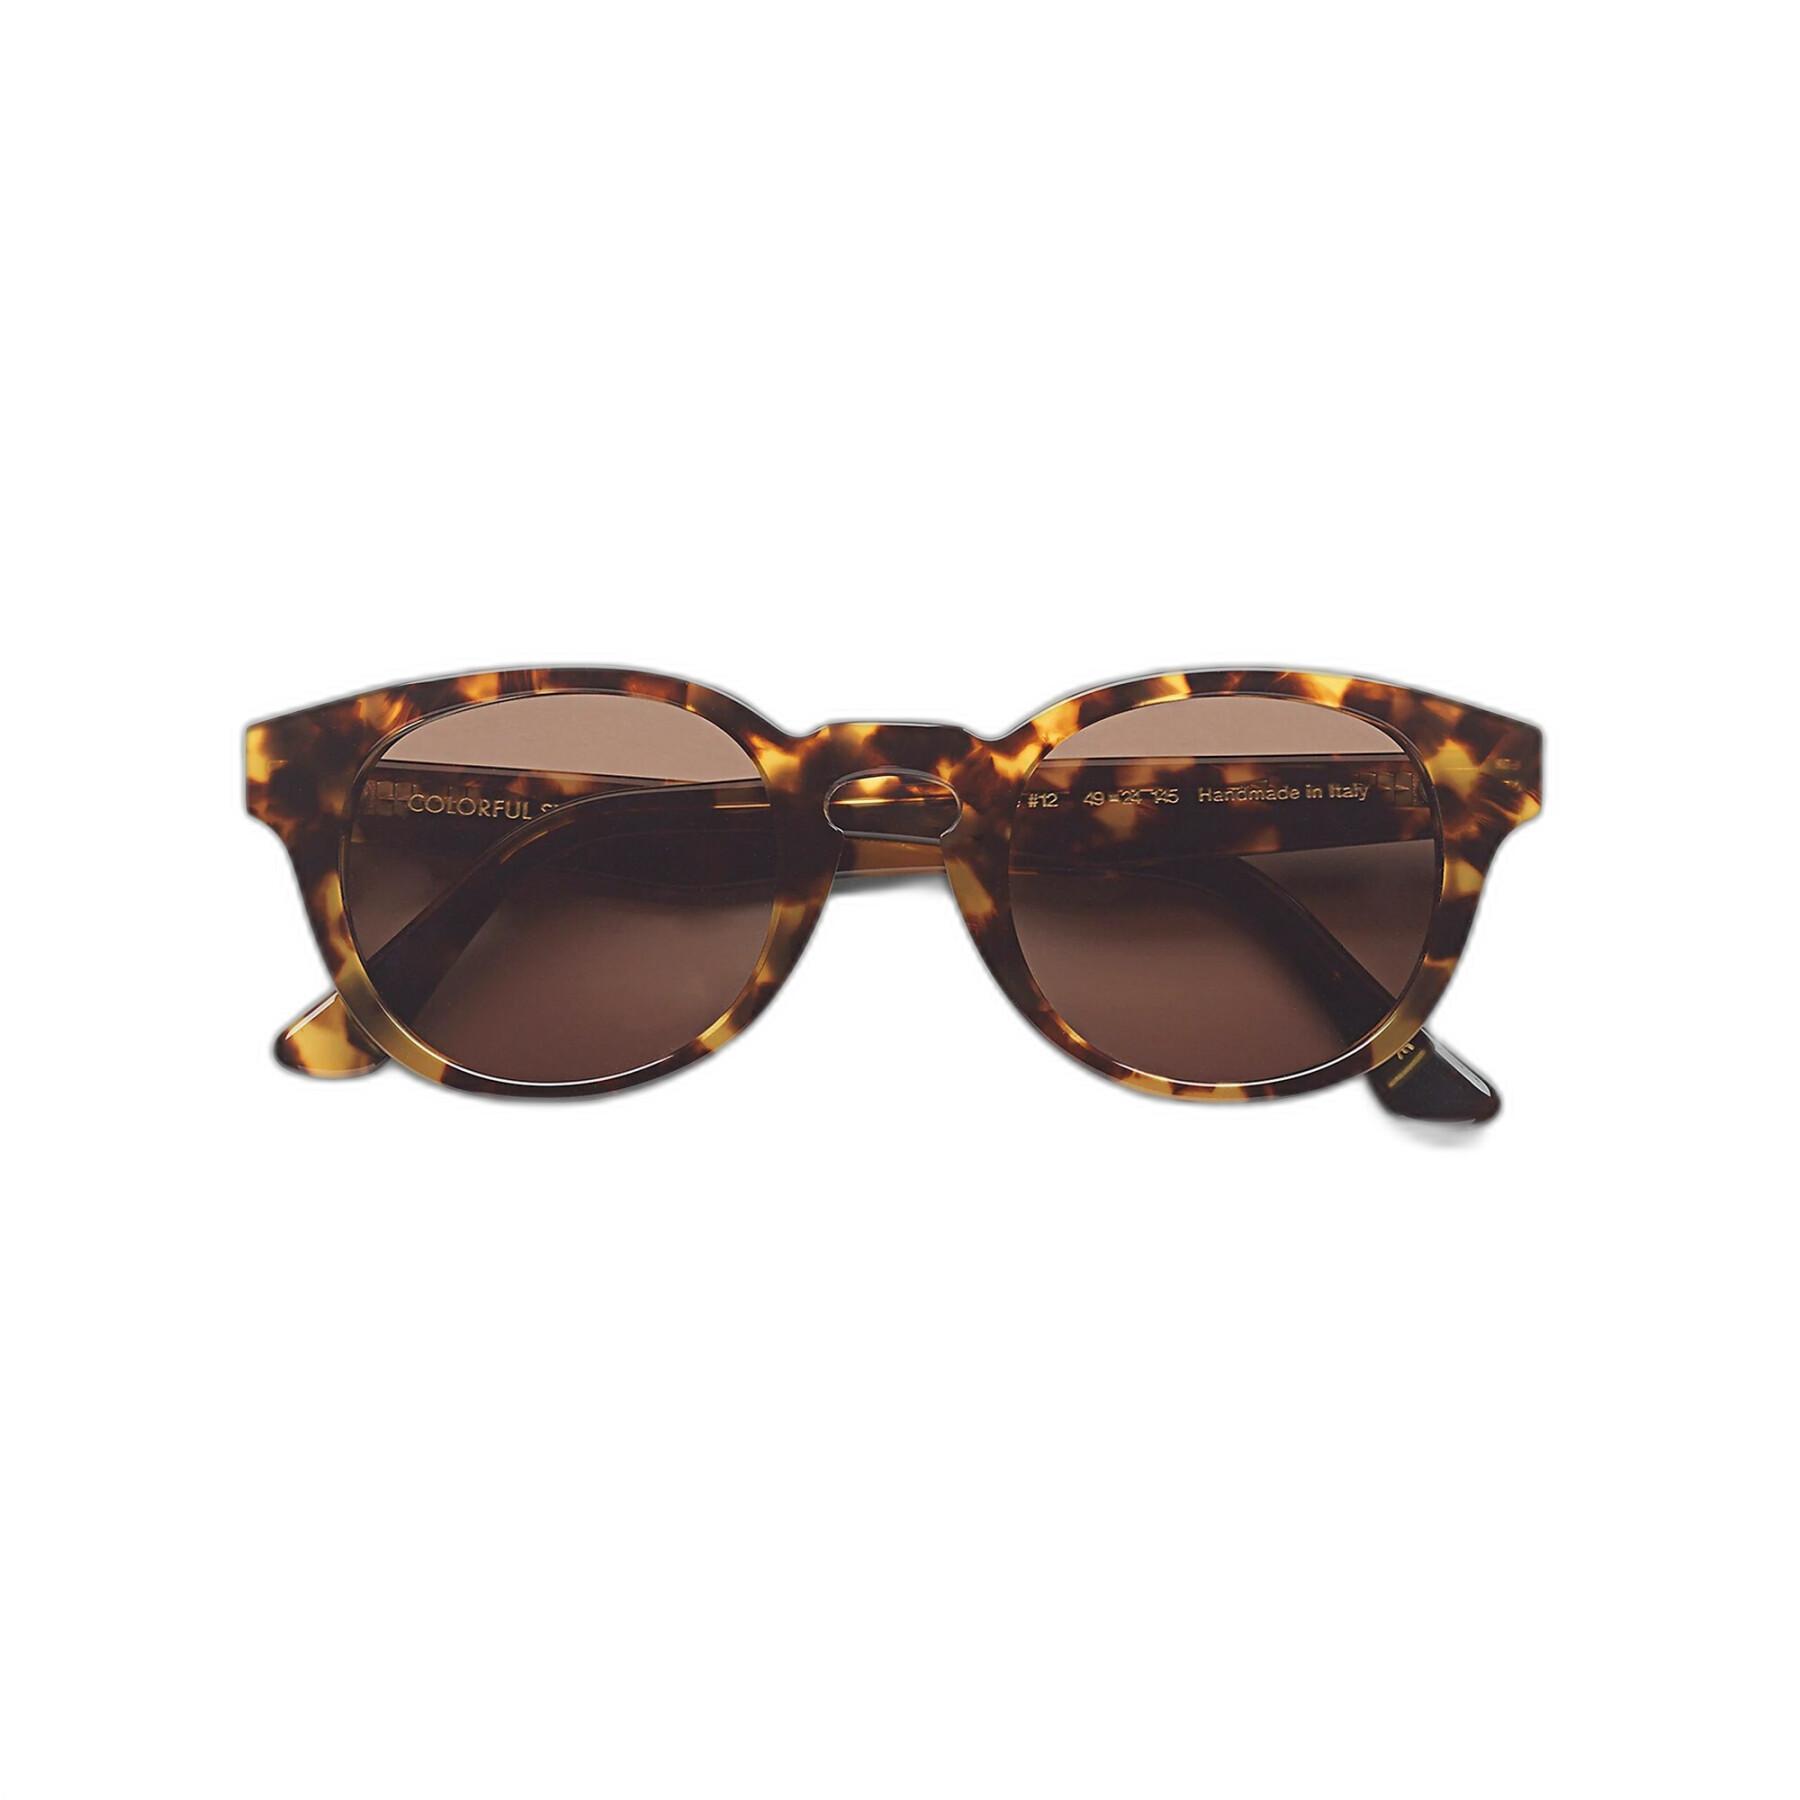 Sunglasses Colorful Standard 12 classic havana/brown